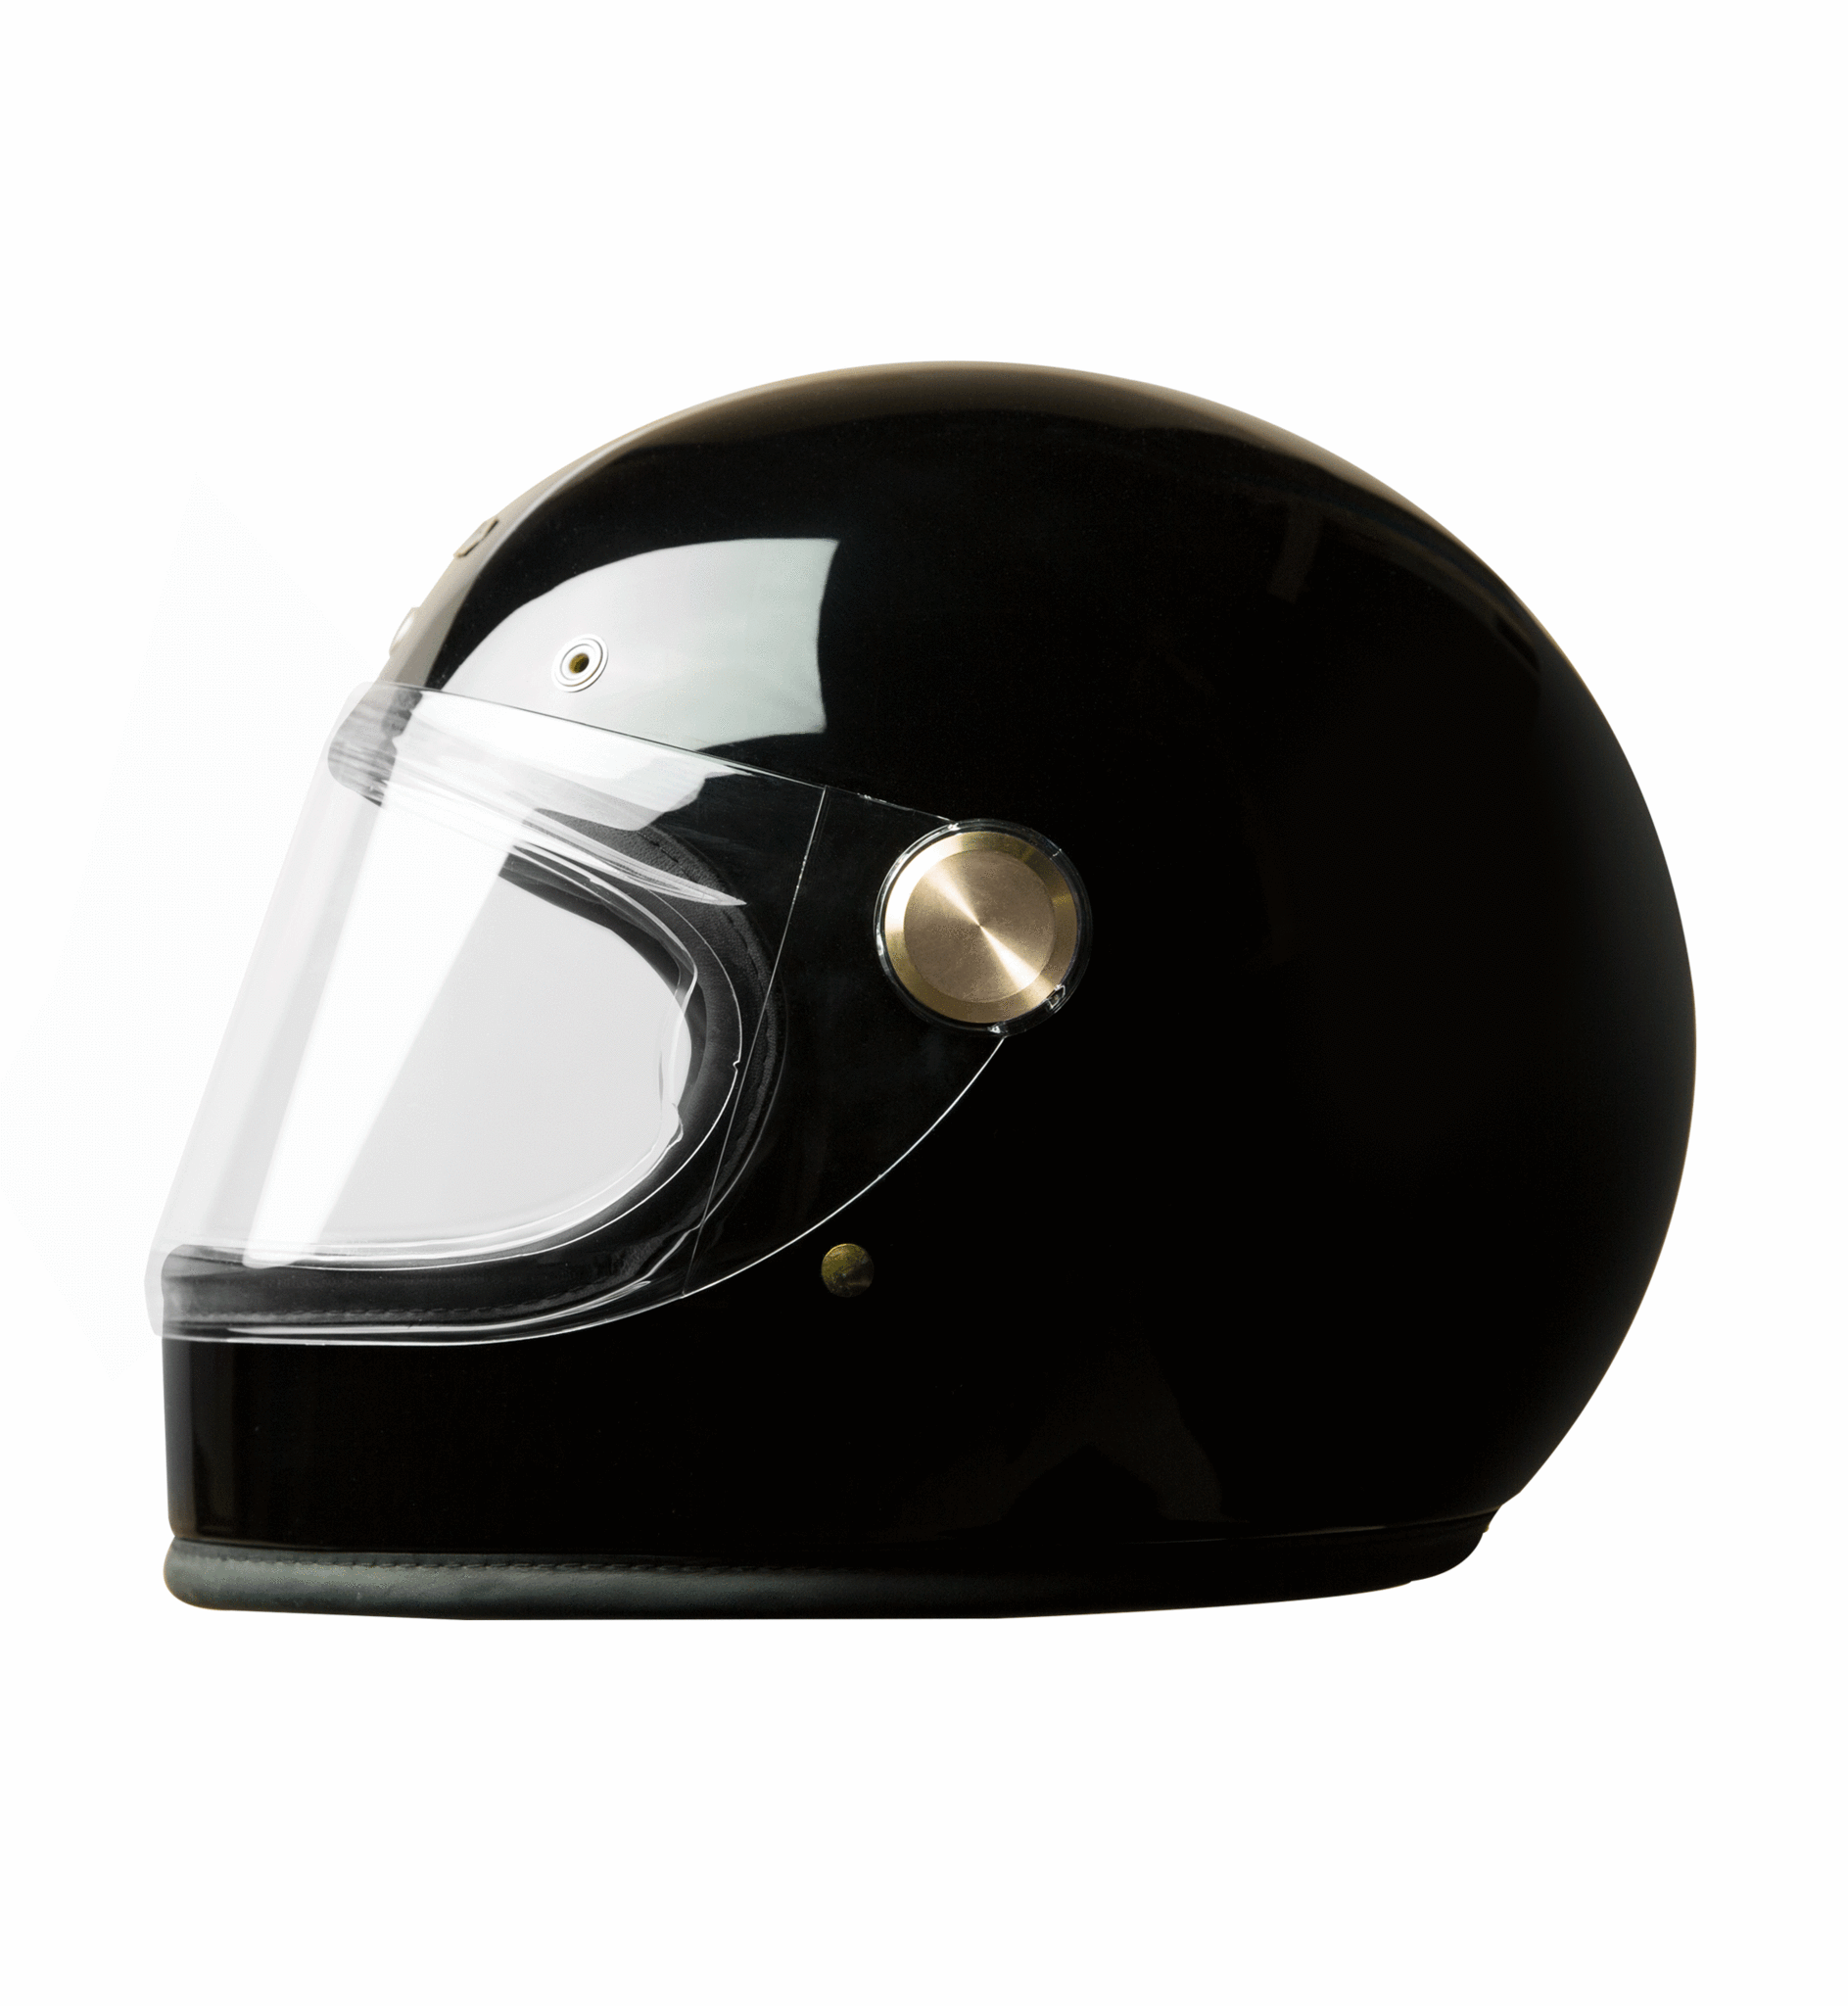 Hedon Heroine racer signature black motorcycle helmet